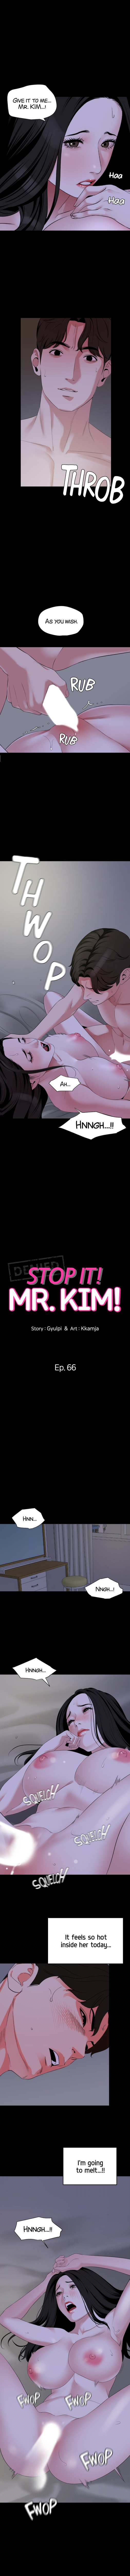 Stop it! Mr. KIM! image